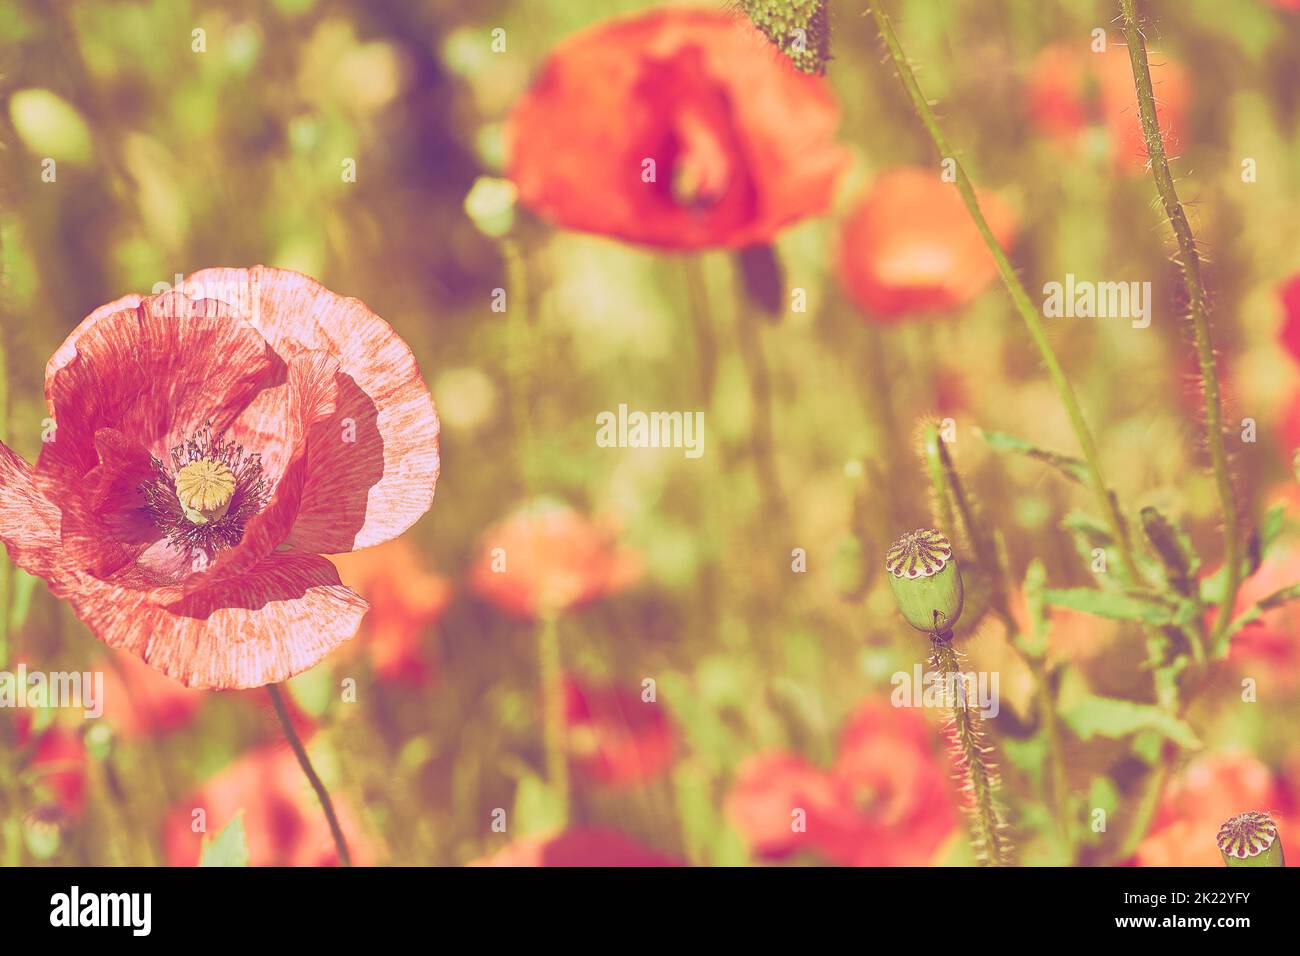 Flores silvestres de amapola roja delicada de cerca Foto de stock